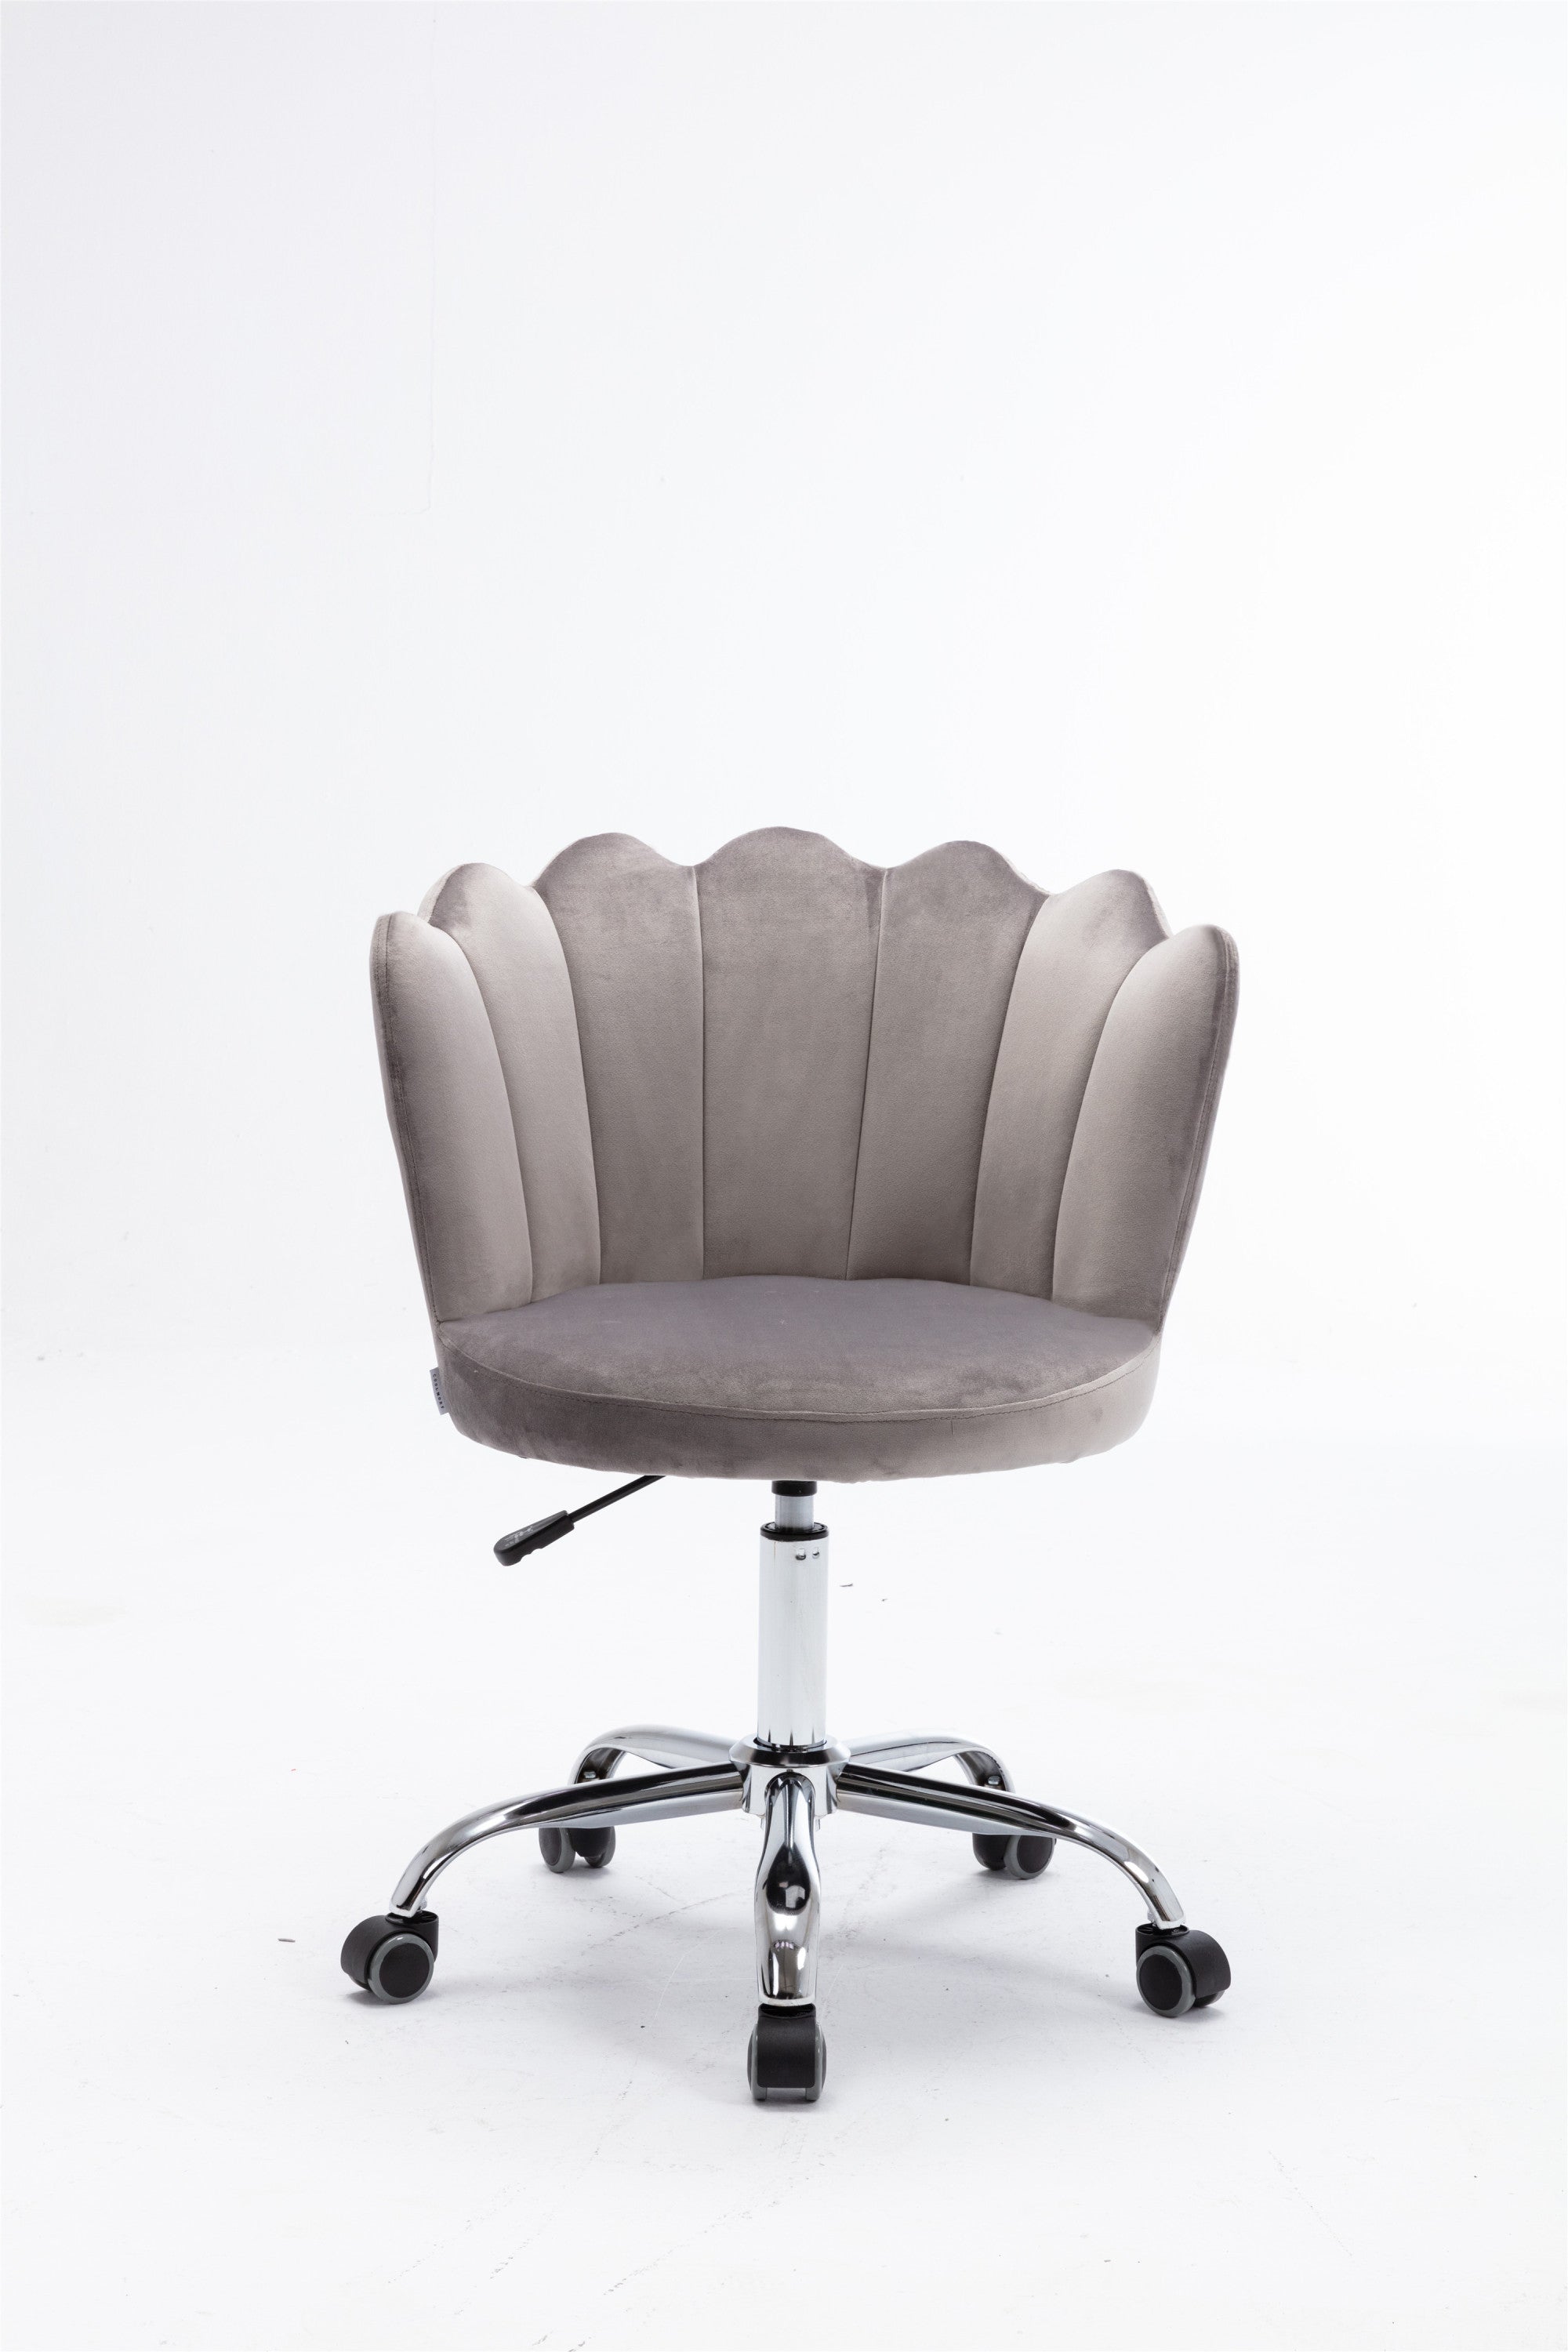 NOBLEMOOD Velvet Home Office Chair, Modern Adjustable Swivel Shell Desk Chair for Living Room Upholstered Cute Vanity Chair with Wheels, Comfy Task Chair Accent Chair for Living Room